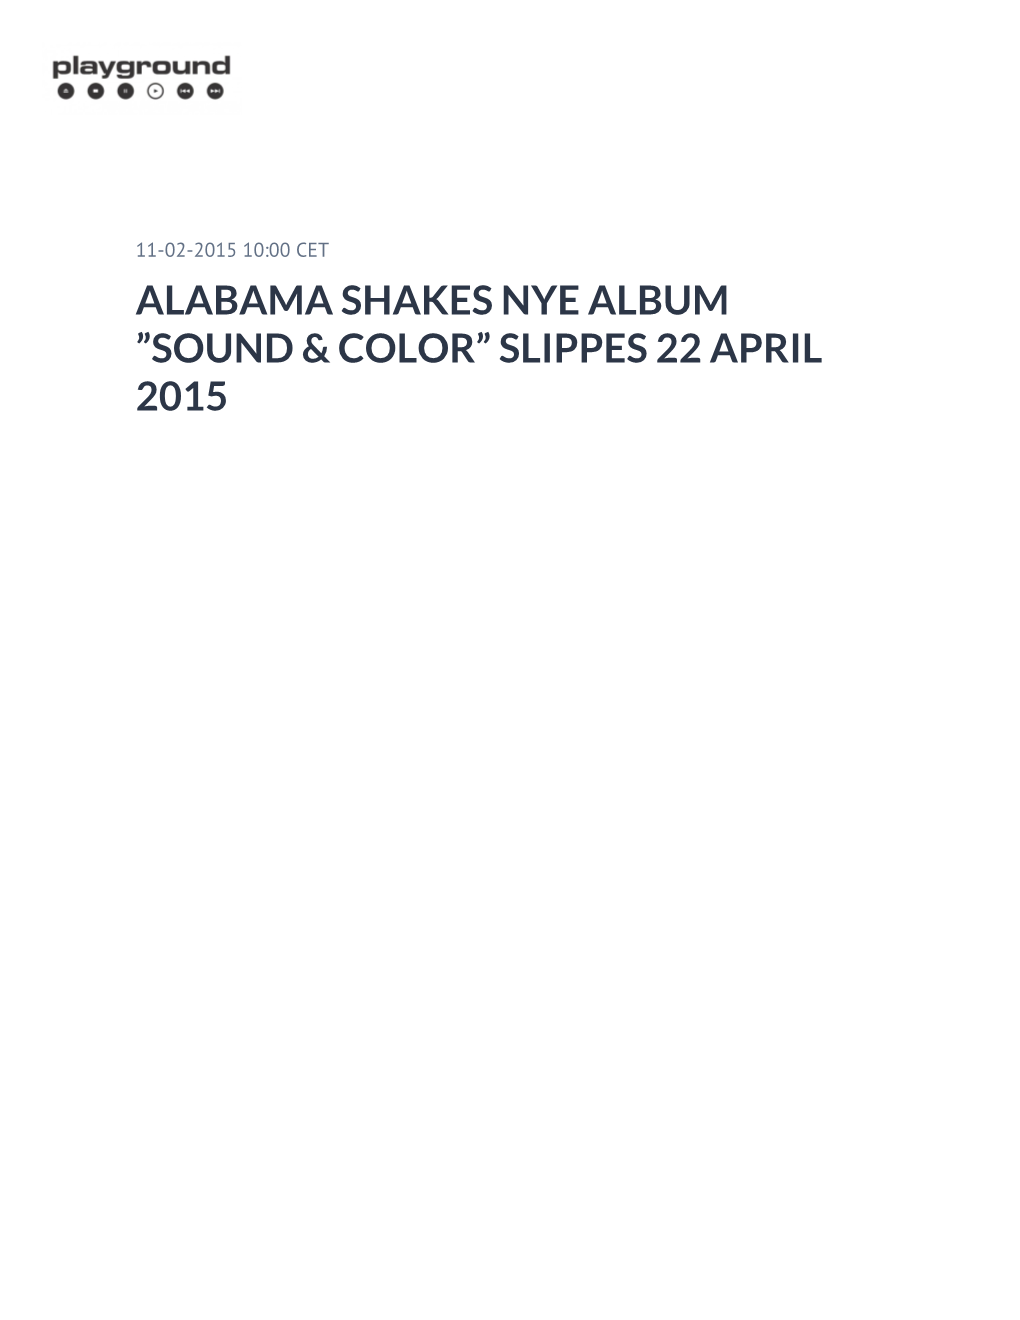 Alabama Shakes Nye Album ”Sound & Color”